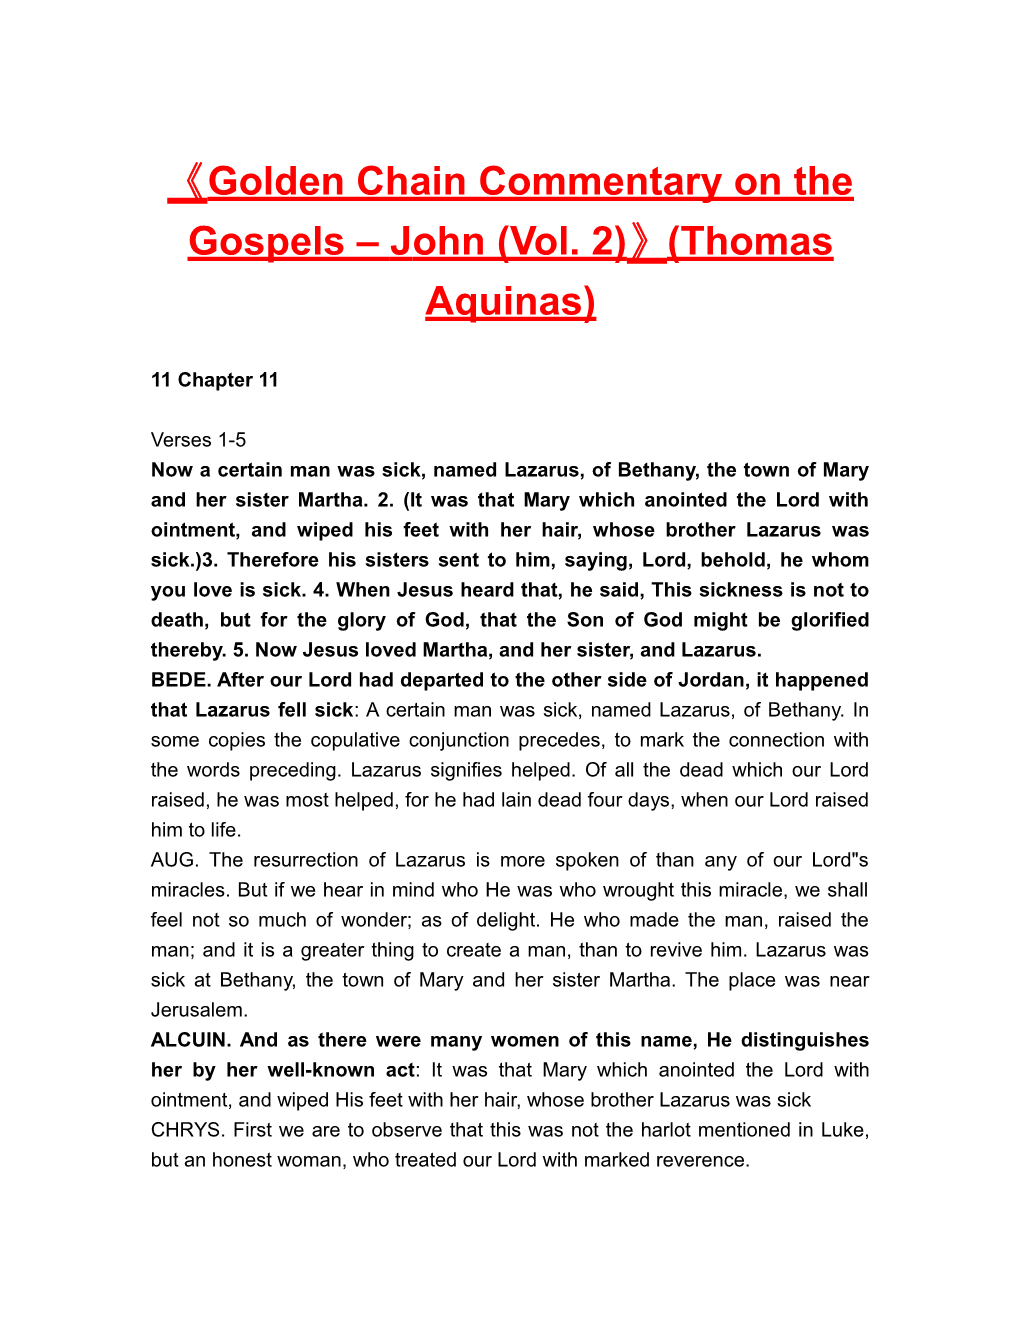 Golden Chain Commentary on the Gospels John (Vol. 2) (Thomas Aquinas)